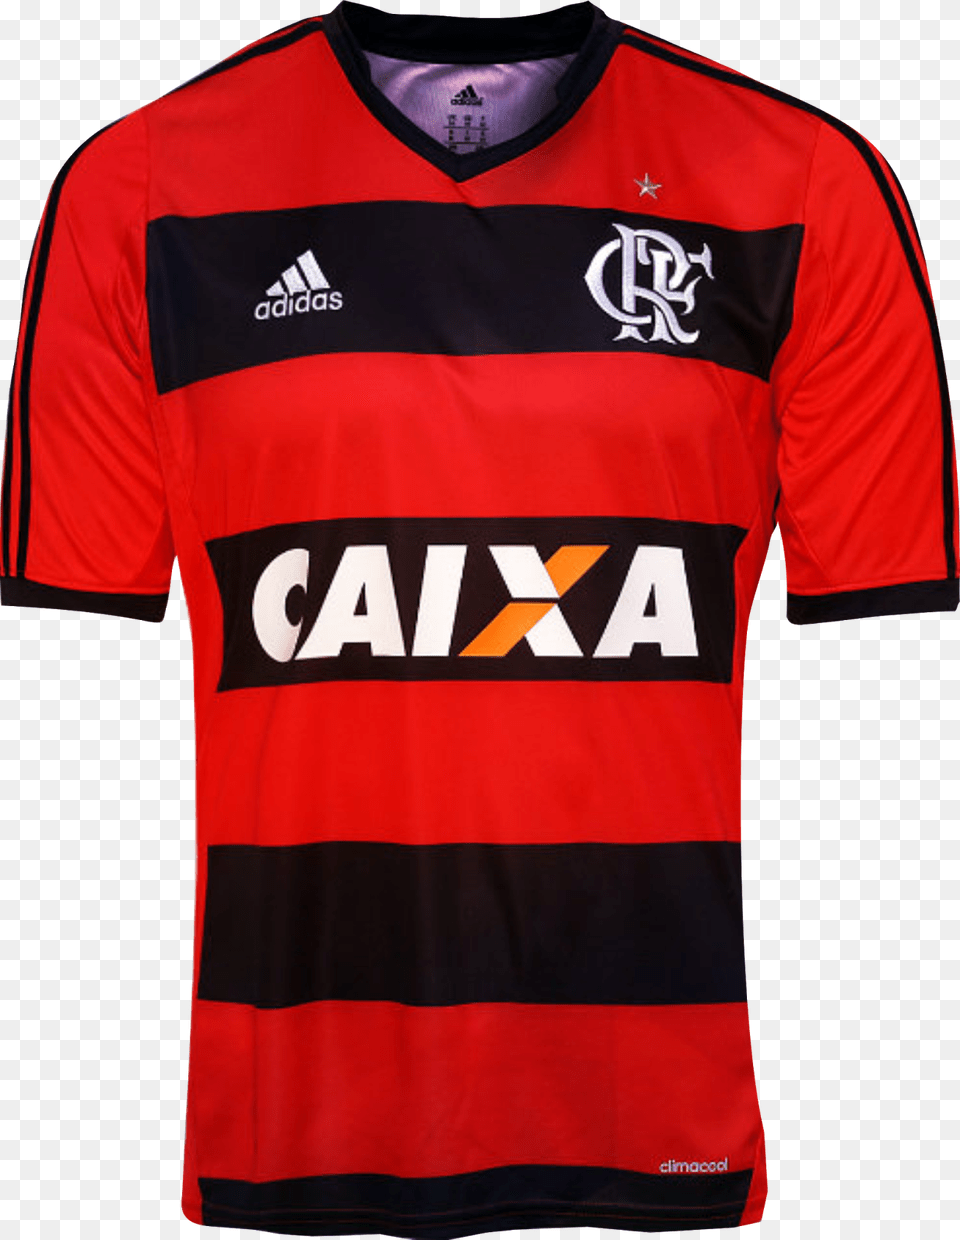 Clip Art Camisa Do Flamengo Flamengo Kit 17, Clothing, Shirt, Jersey, T-shirt Free Png Download